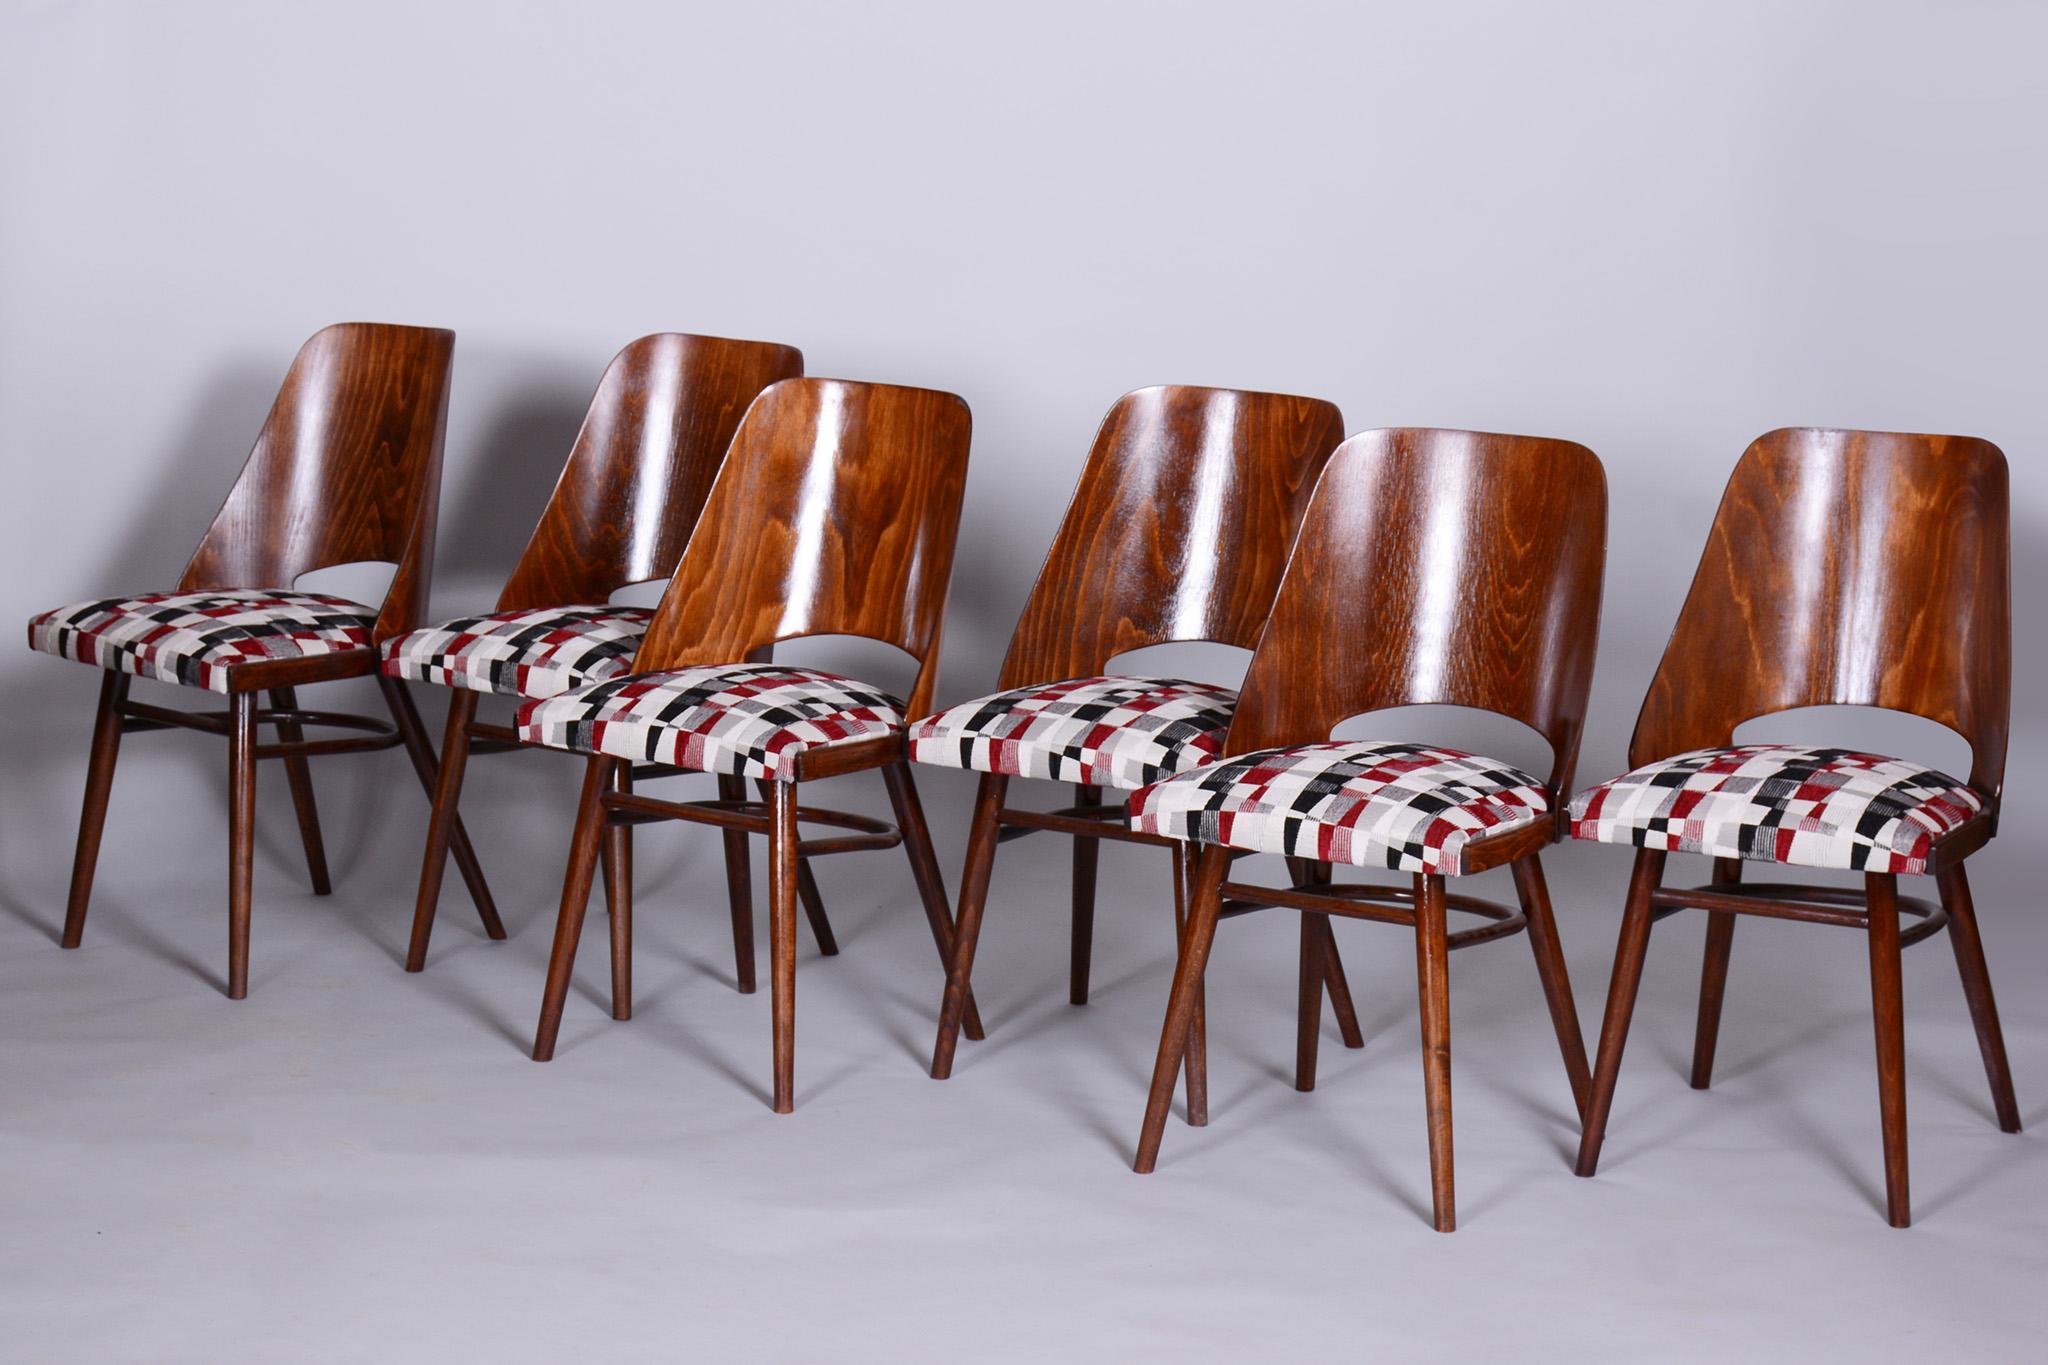 Fabric Set of Six Midcentury Beech Chairs, Oswald Heardtl, Restored, Czechia, 1950s For Sale